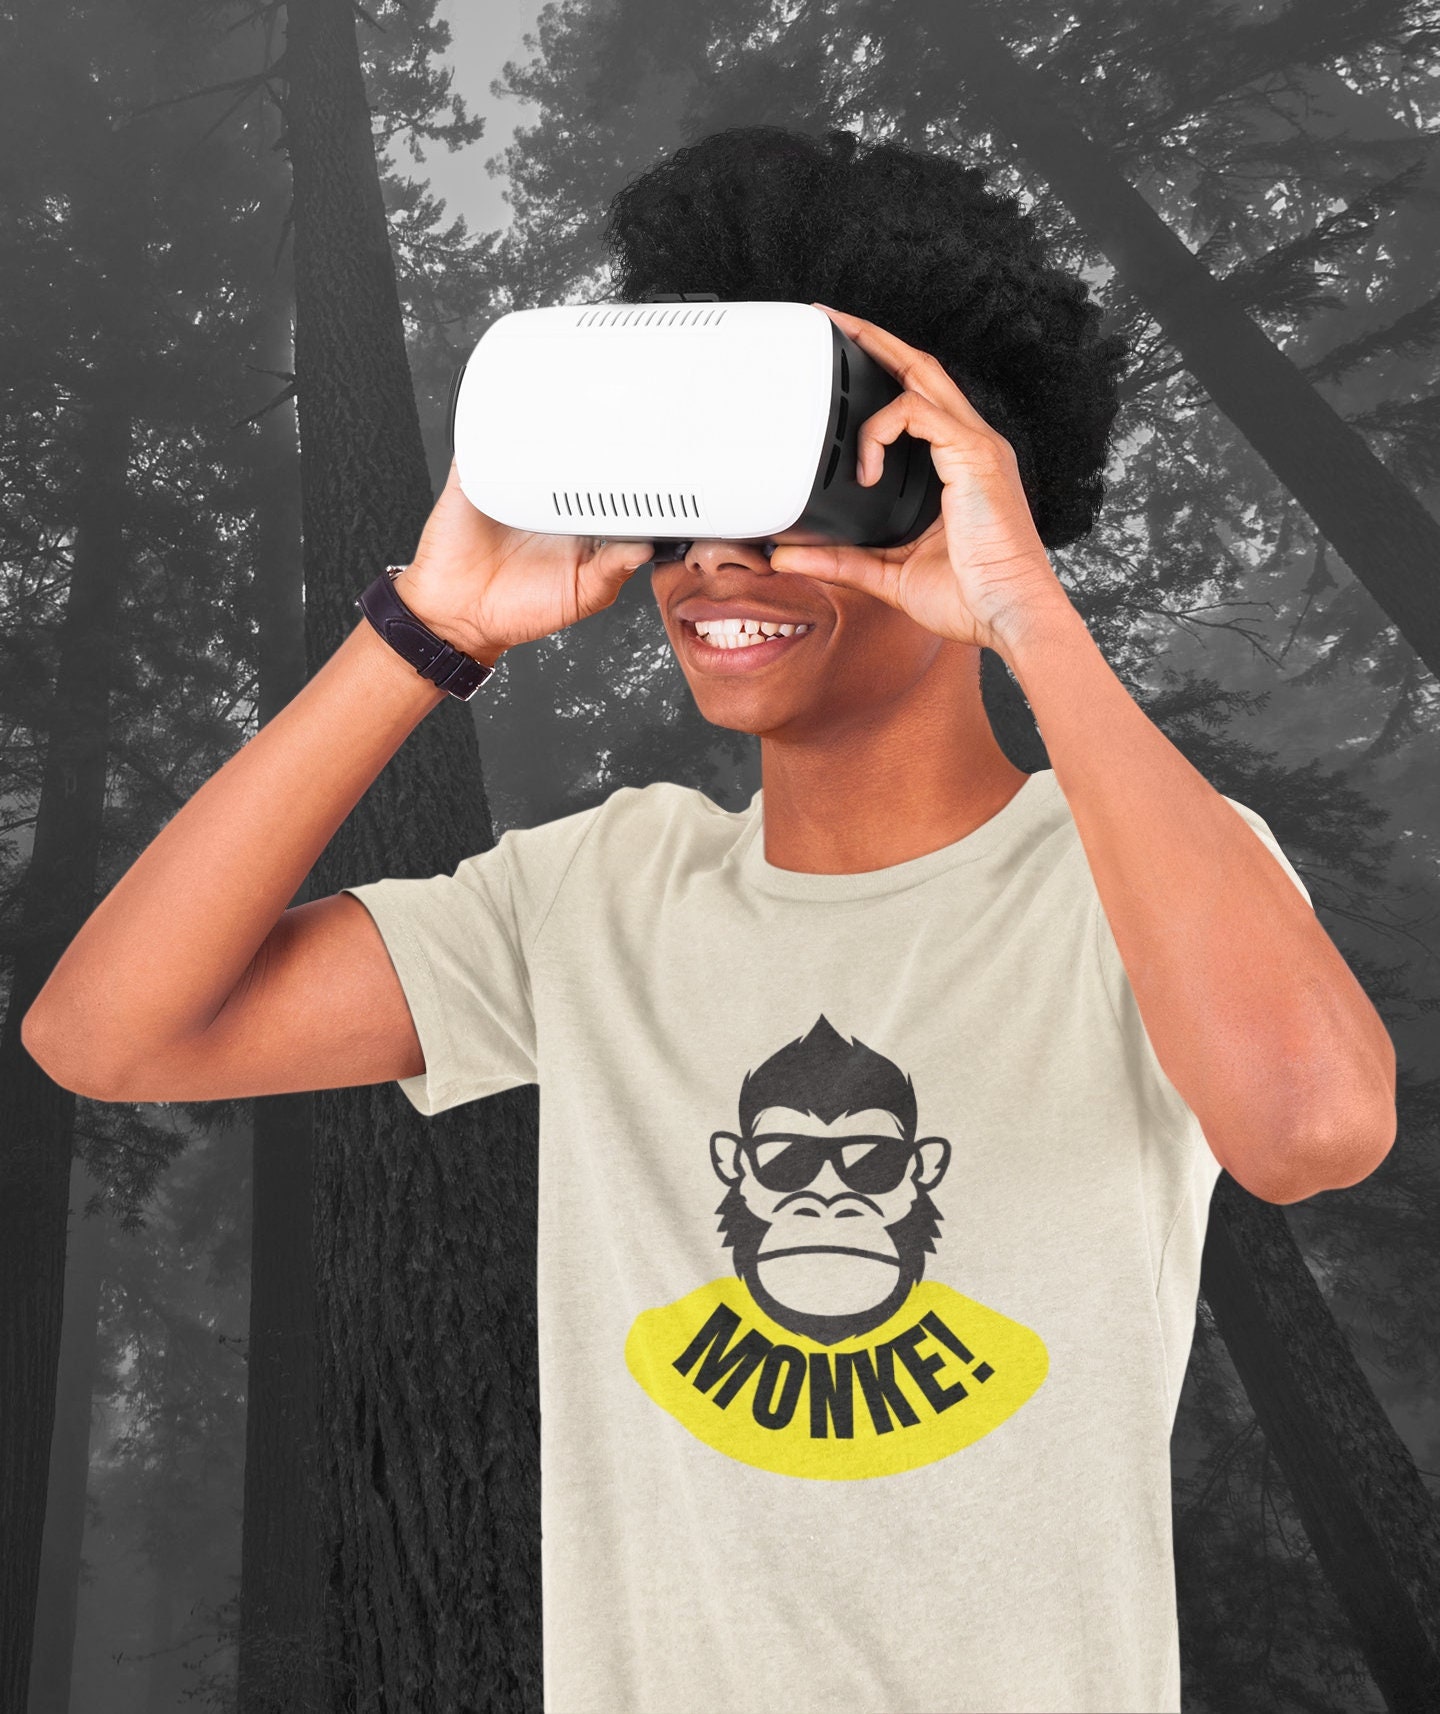 Gorilla Tag Merch for Kids VR Gamer Tee Adult Teens T-Shirt